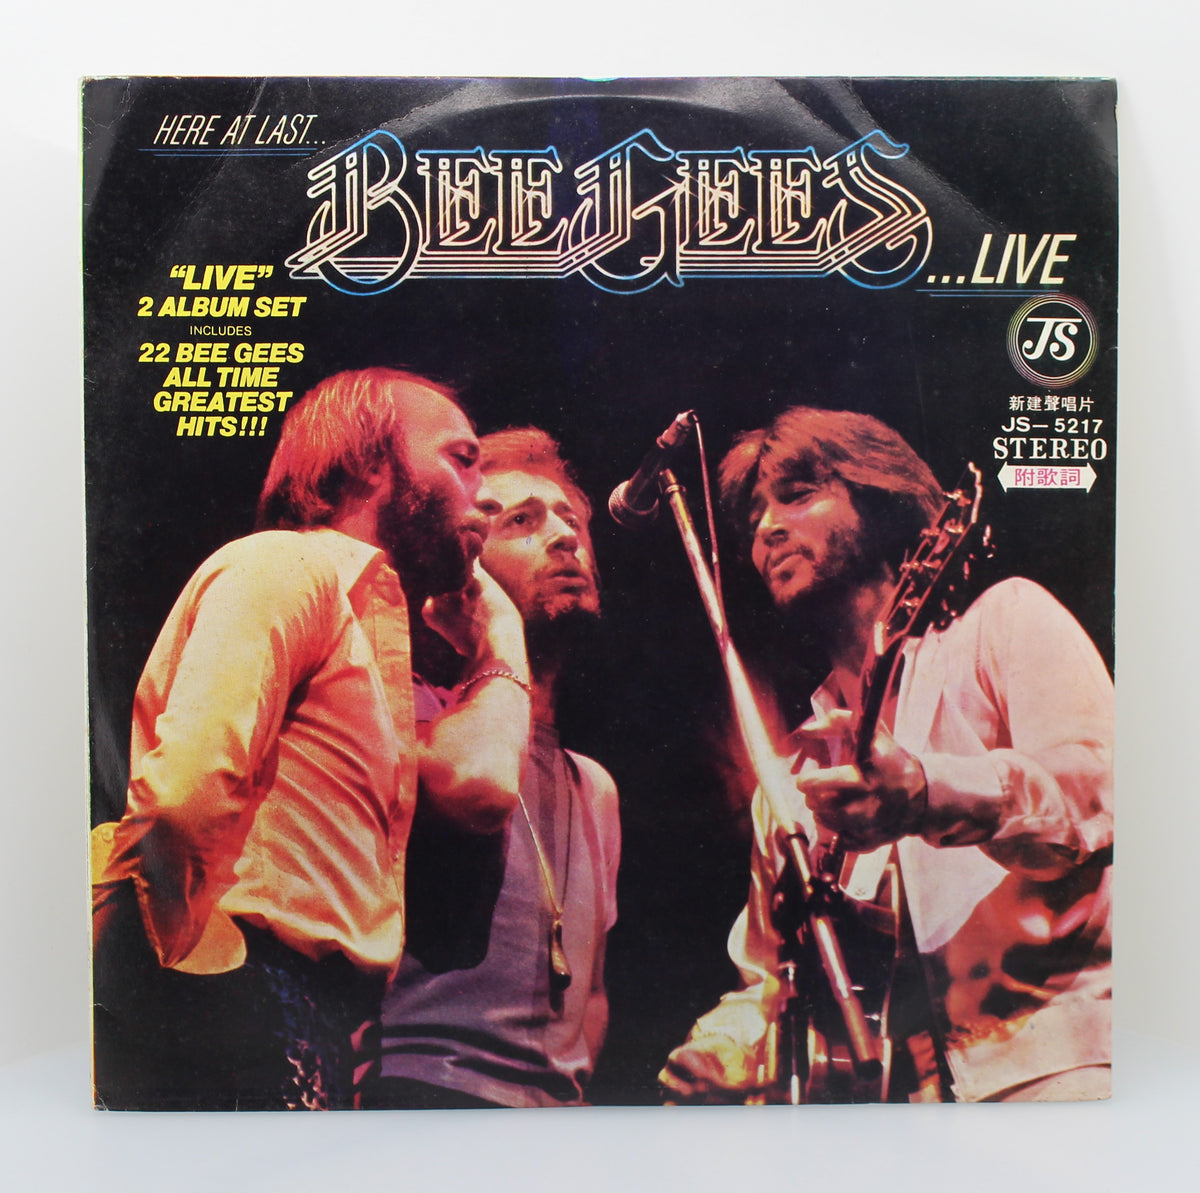 Bee Gees – Here At Last - Live, 2 x Vinyl, LP, Album, Taiwan 1977